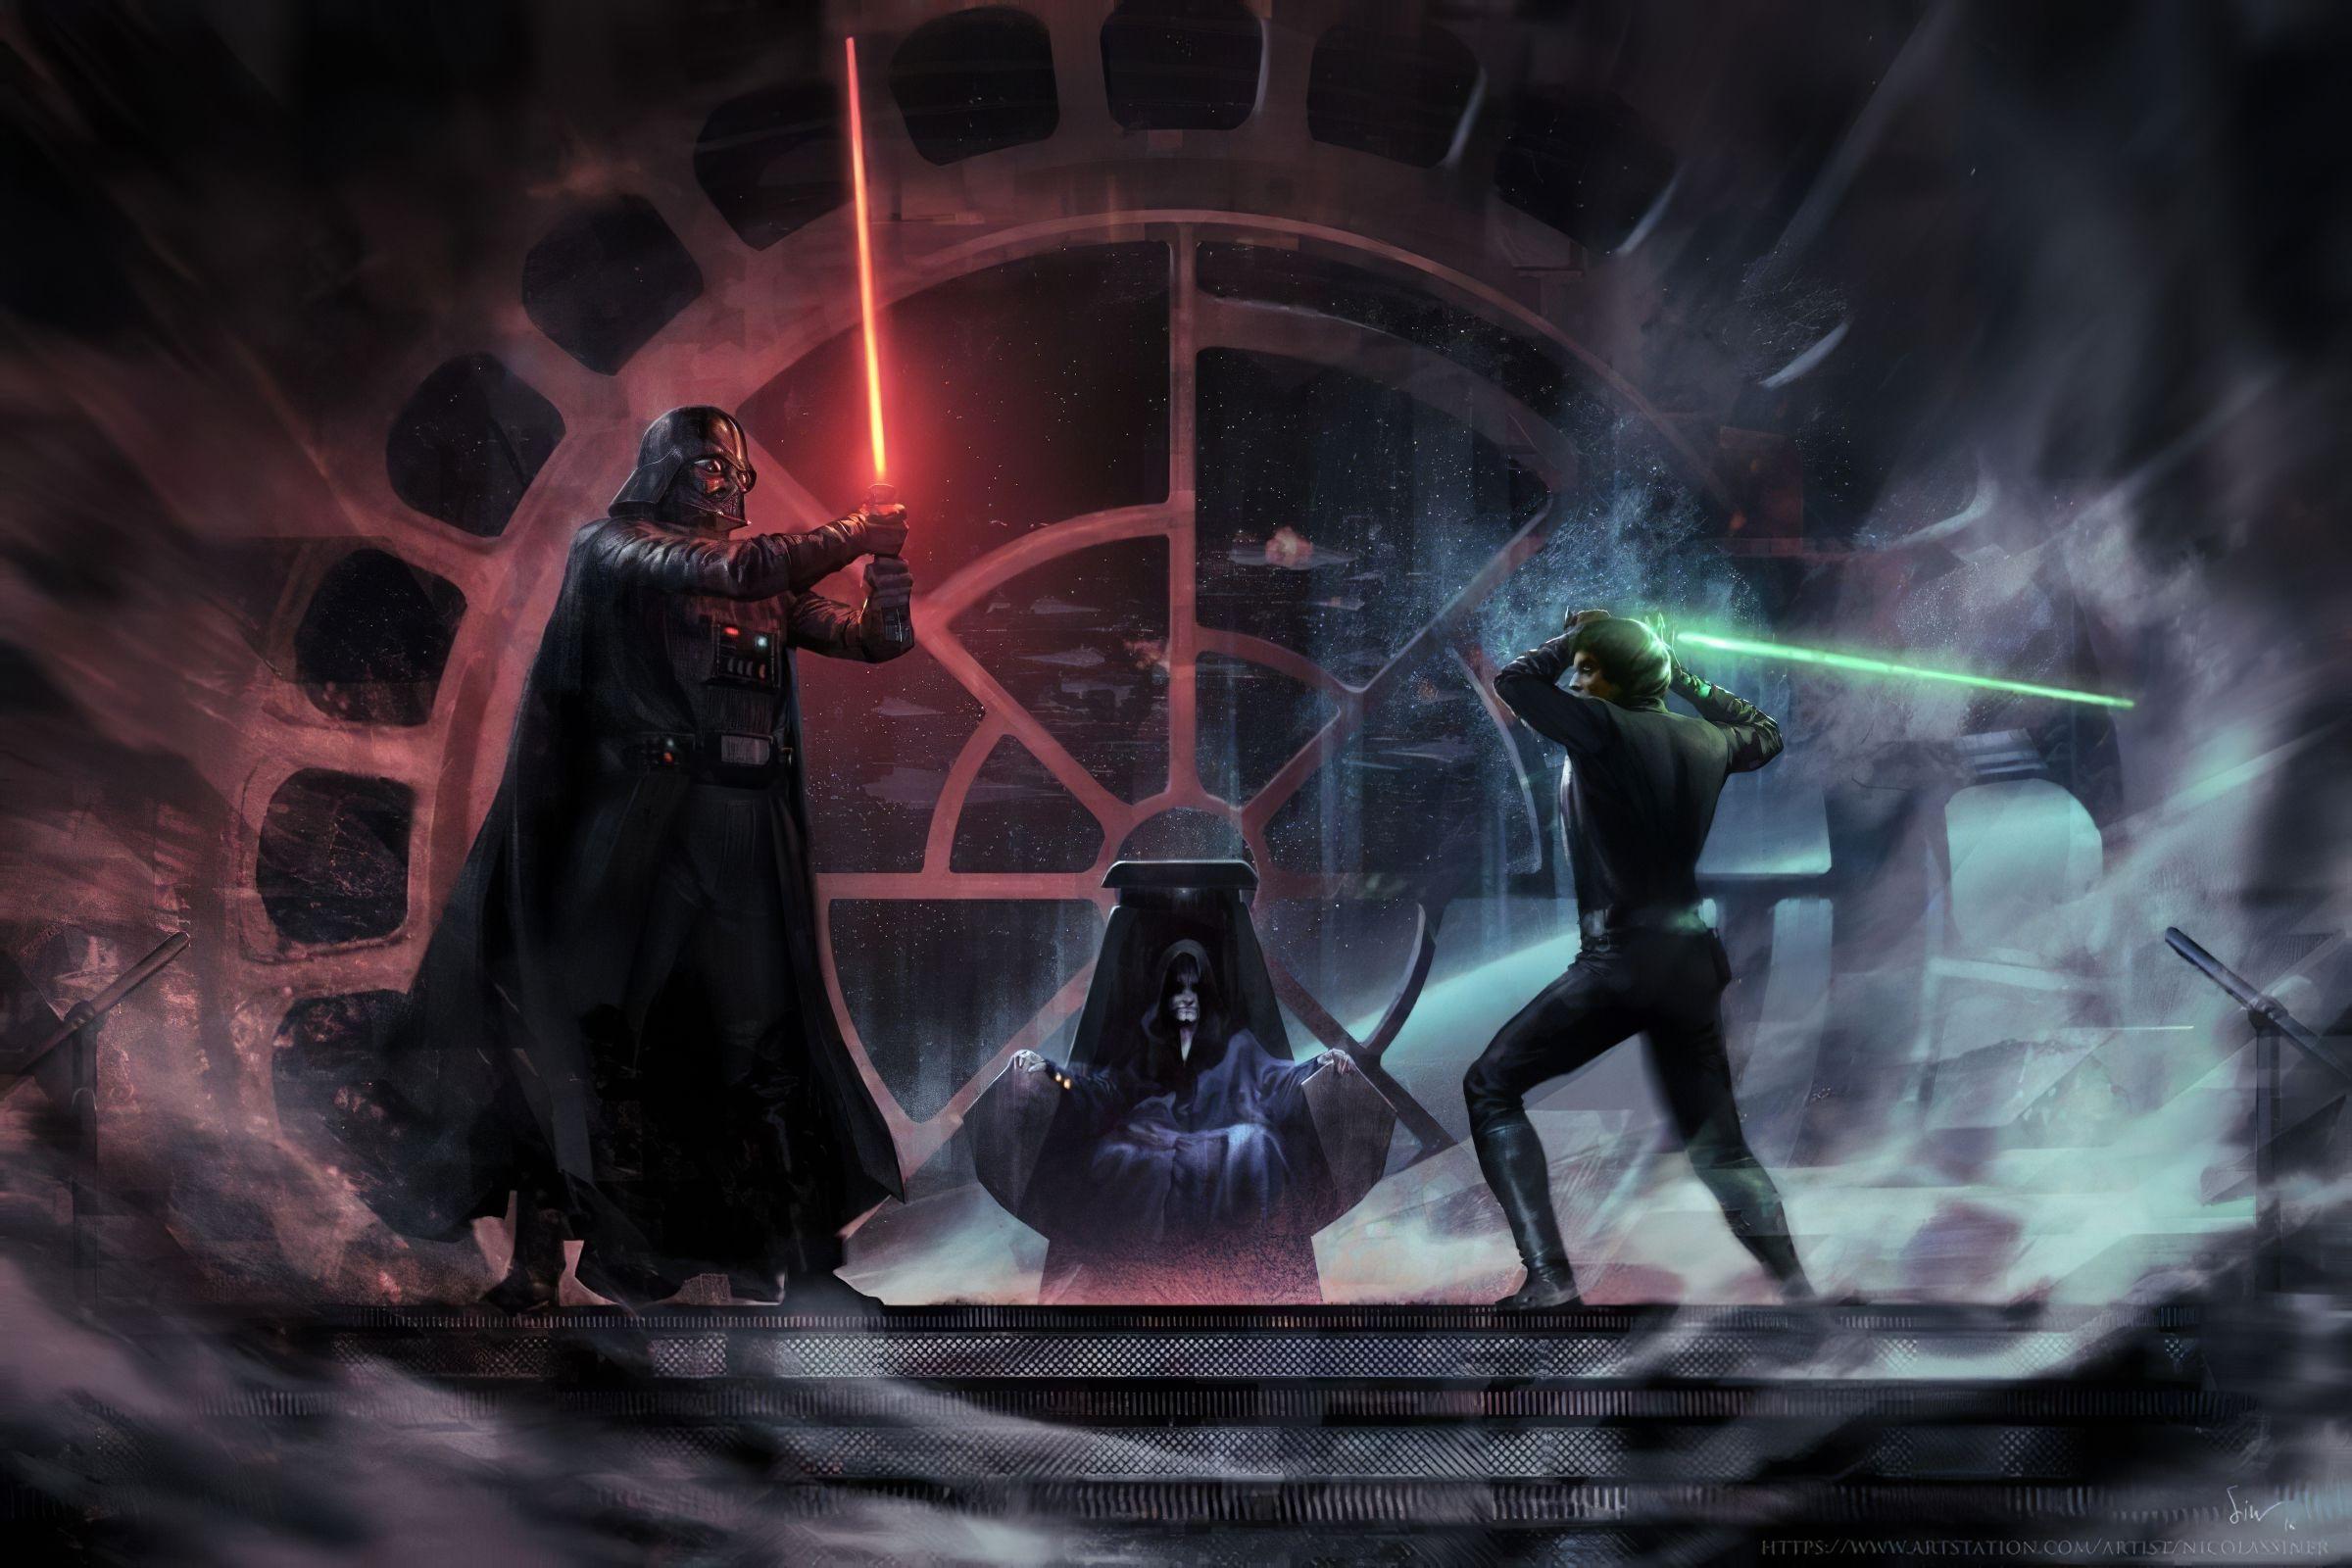 ComicBookcom on Twitter StarWars ObiWan series sneak peek previews  ObiWanKenobi vs Darth Vader duel on DisneyPlusDay  httpstcooOjq0wiczH httpstco0vwATWGmMf  Twitter